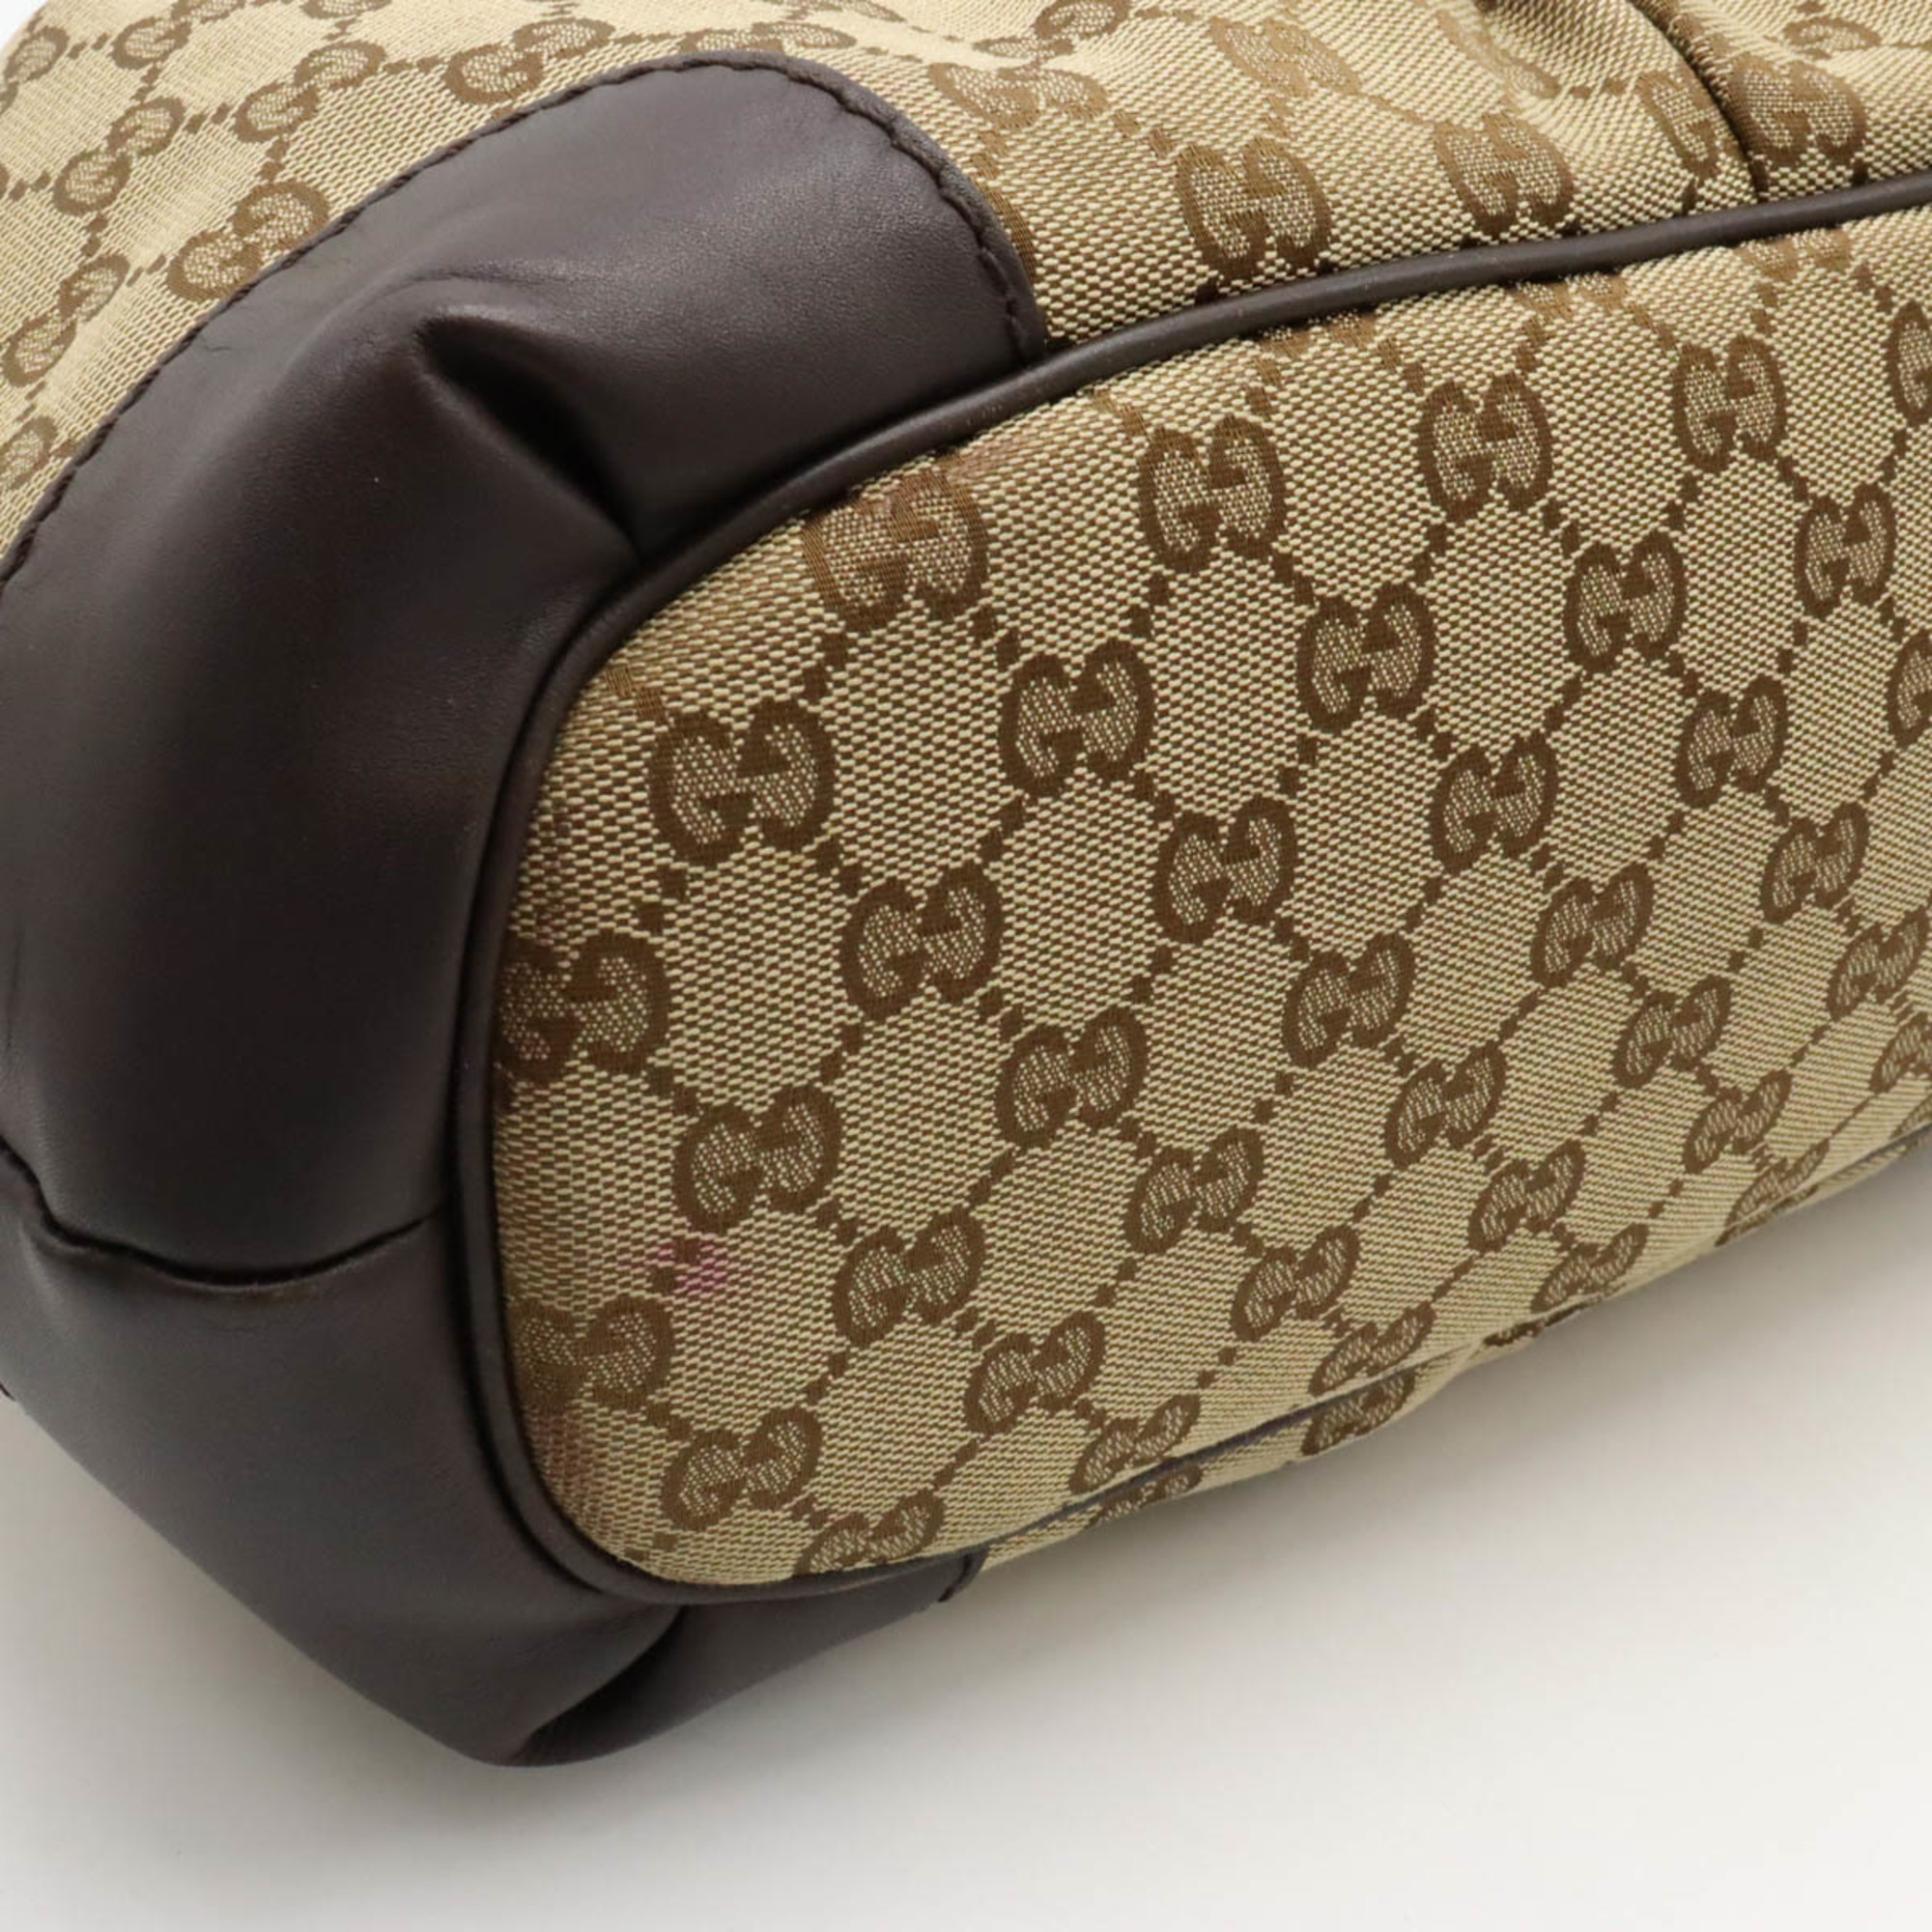 GUCCI Sukey GG Canvas Handbag Tote Bag Shoulder Leather Khaki Beige Dark Brown 247902